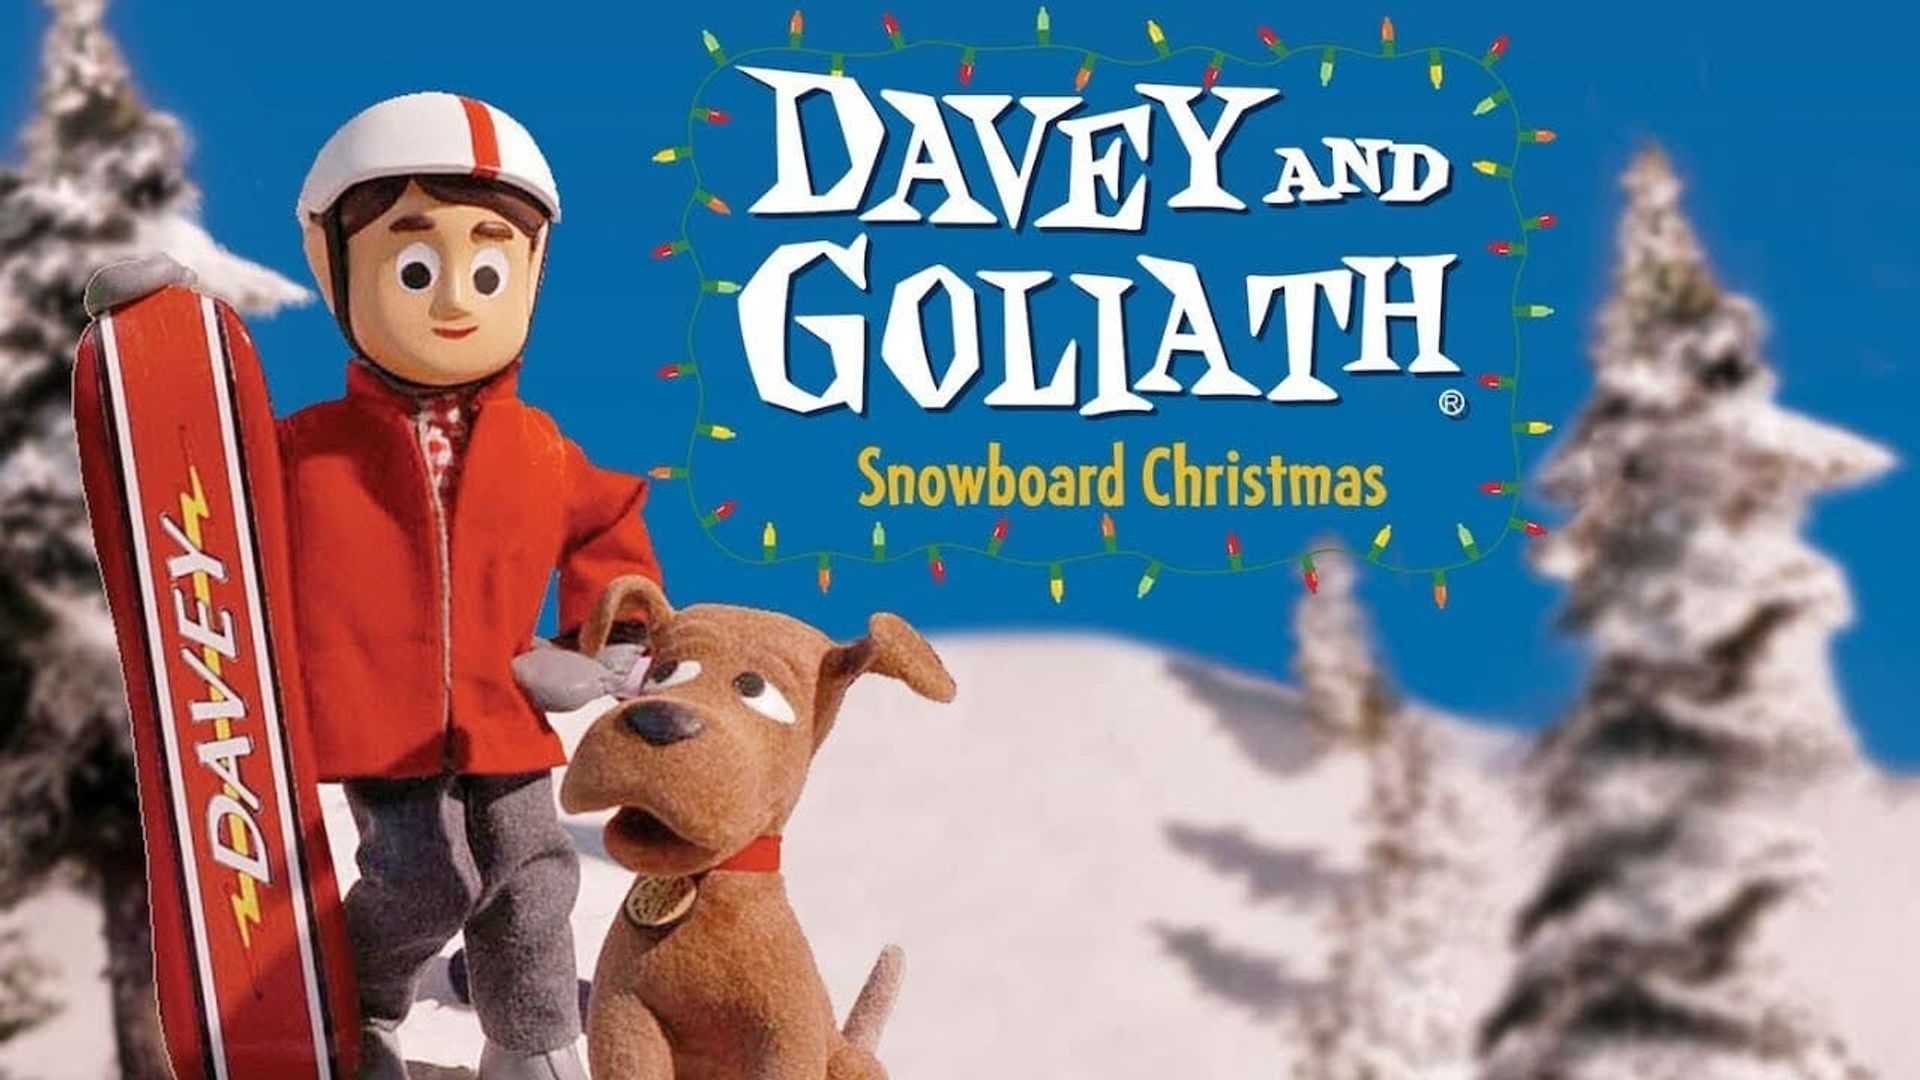 Davey & Goliath's Snowboard Christmas background